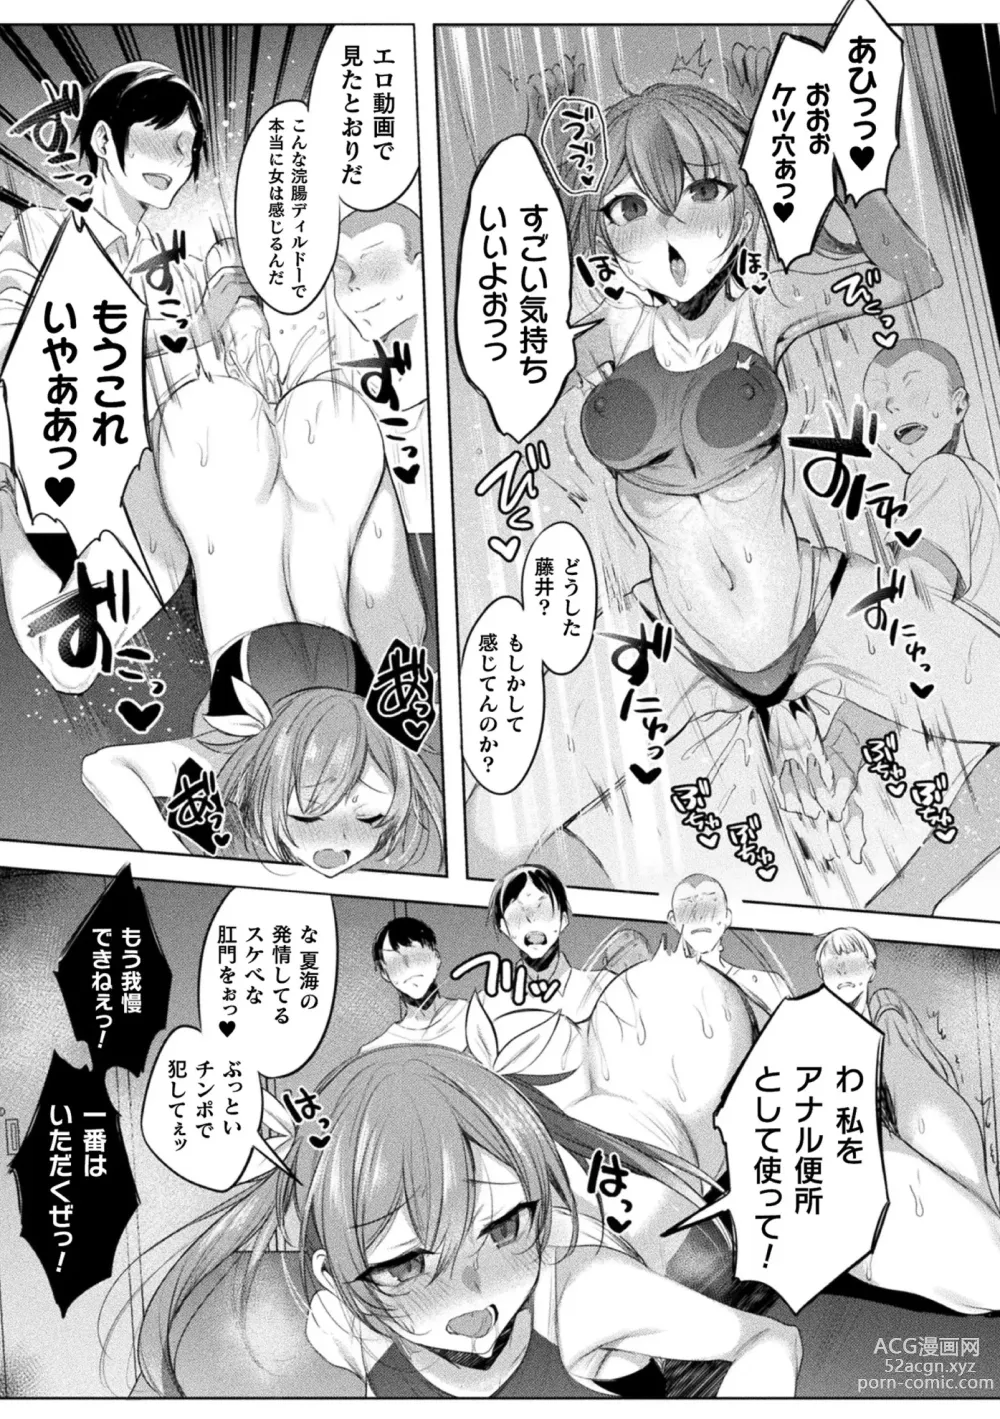 Page 149 of manga Kukkoro Heroines Vol. 27